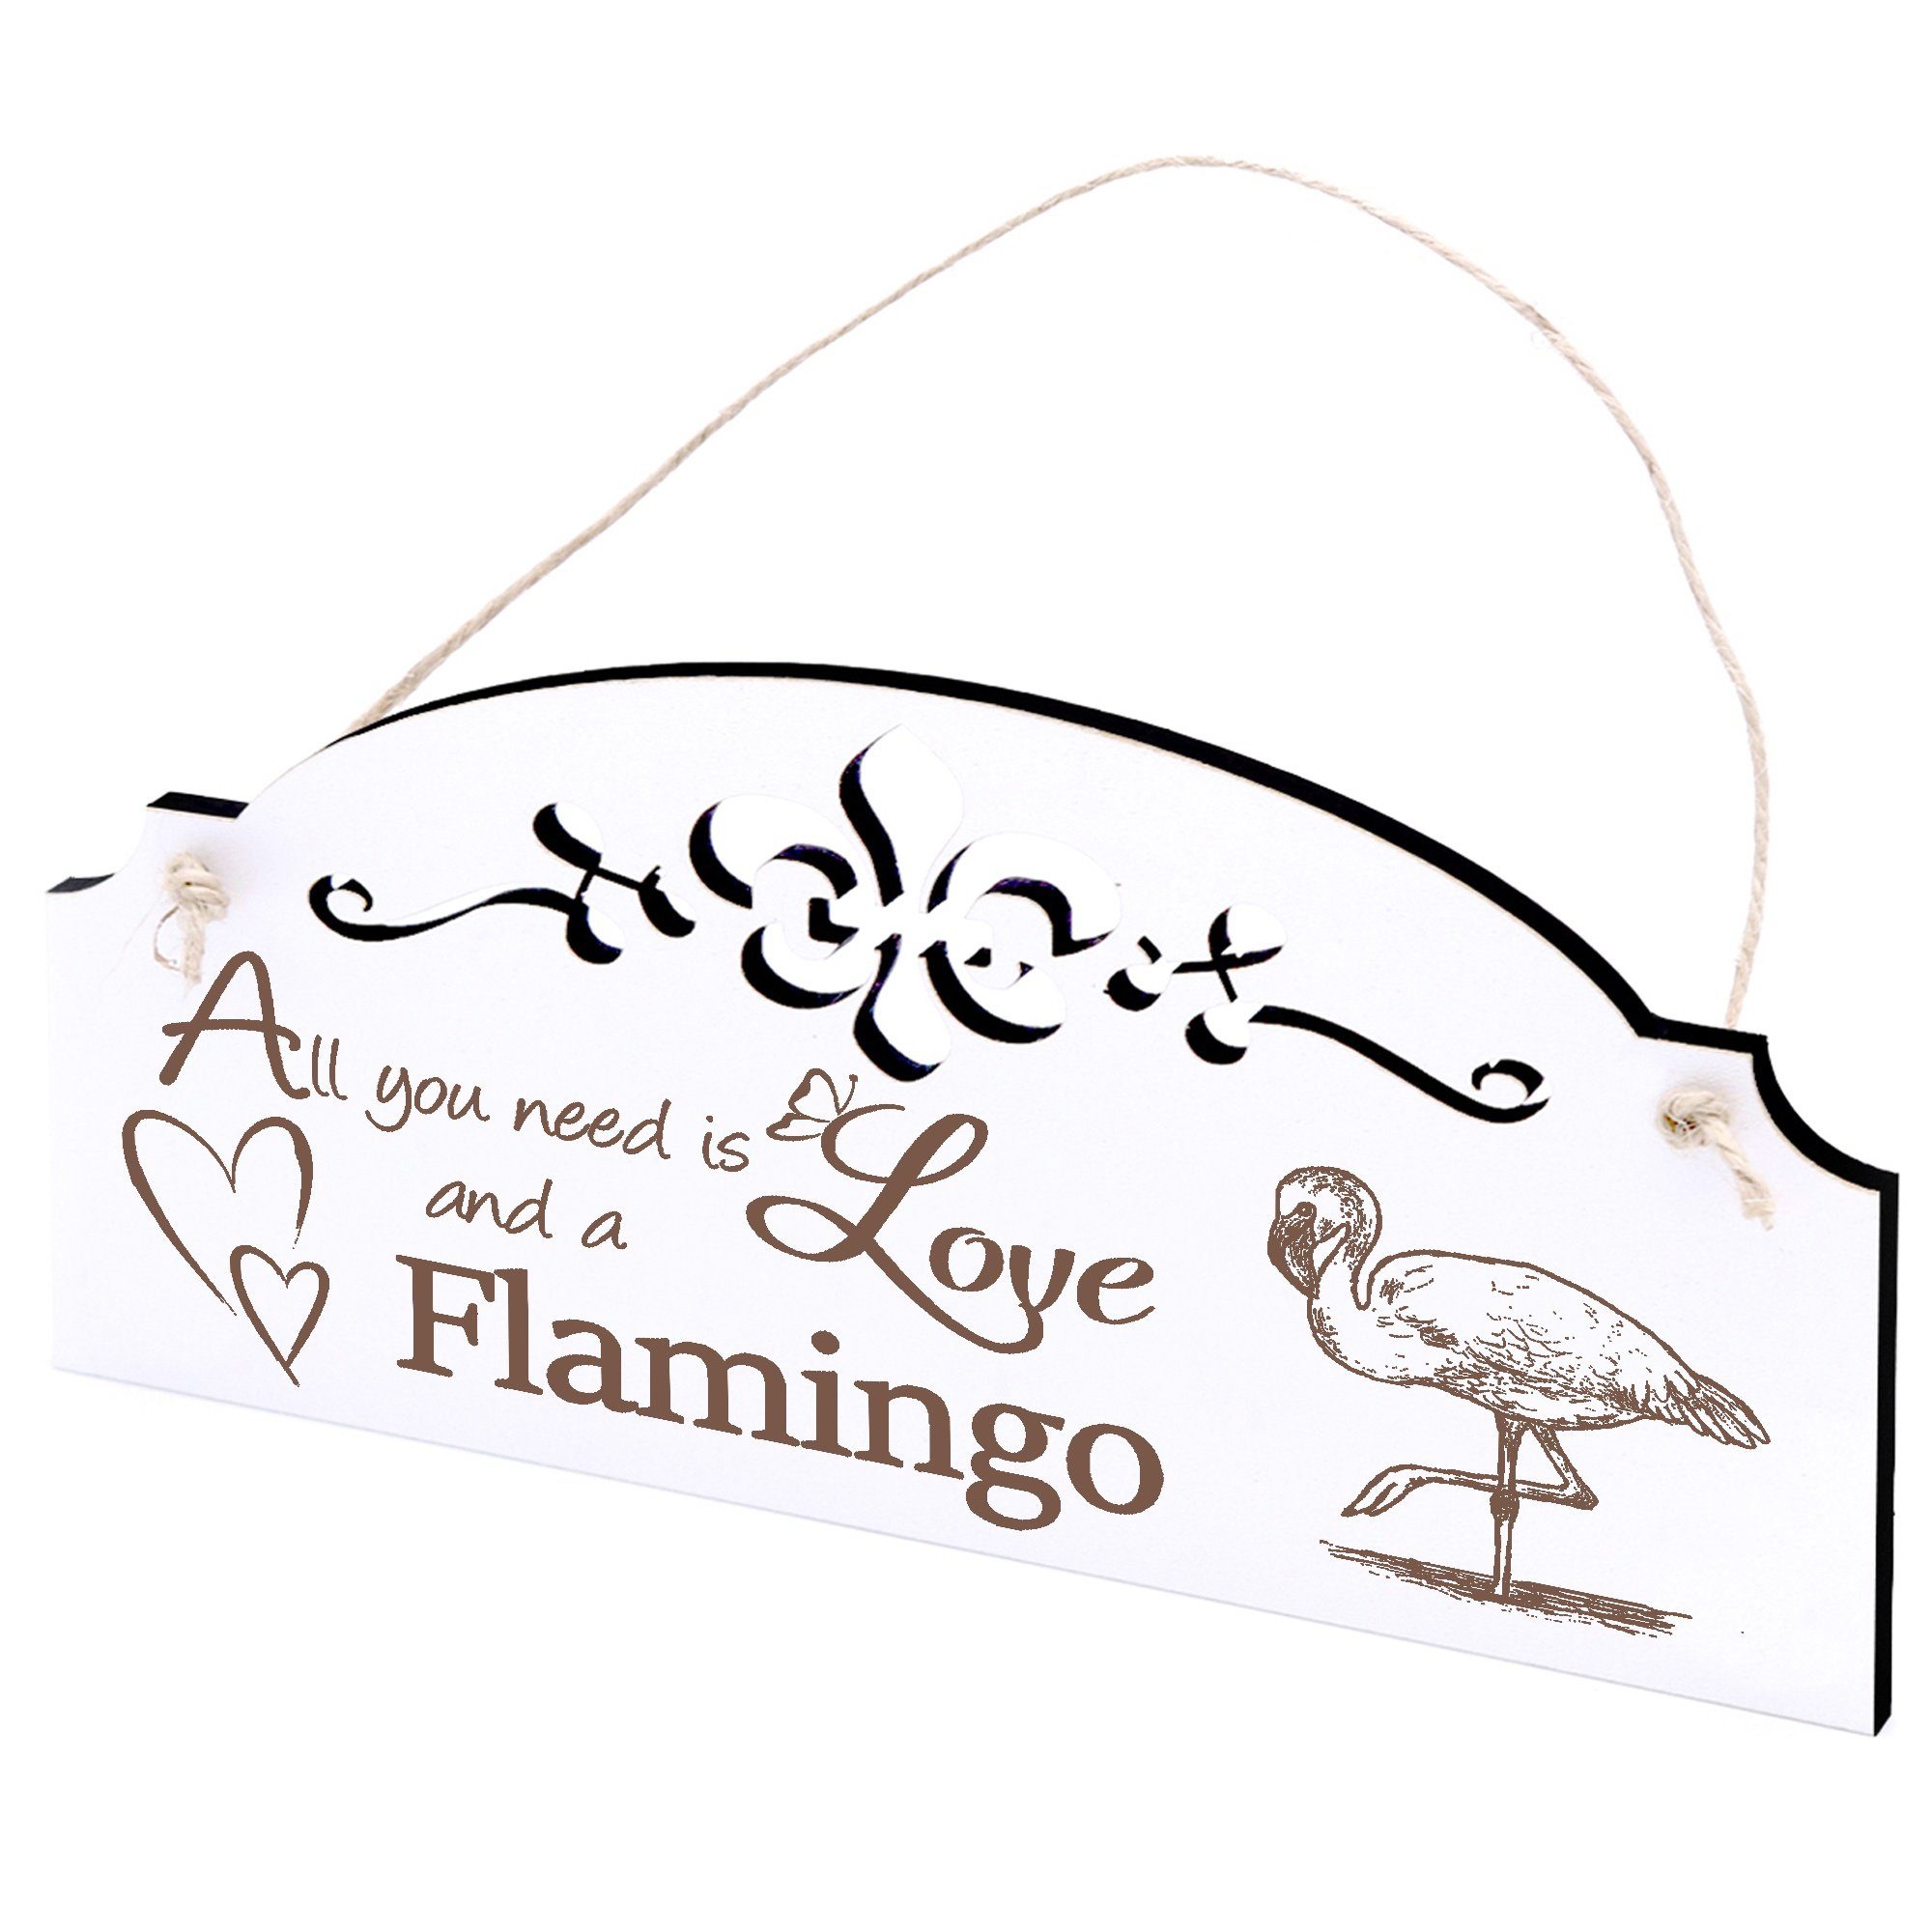 Deko Love need you Hängedekoration Dekolando All Flamingo 20x10cm is